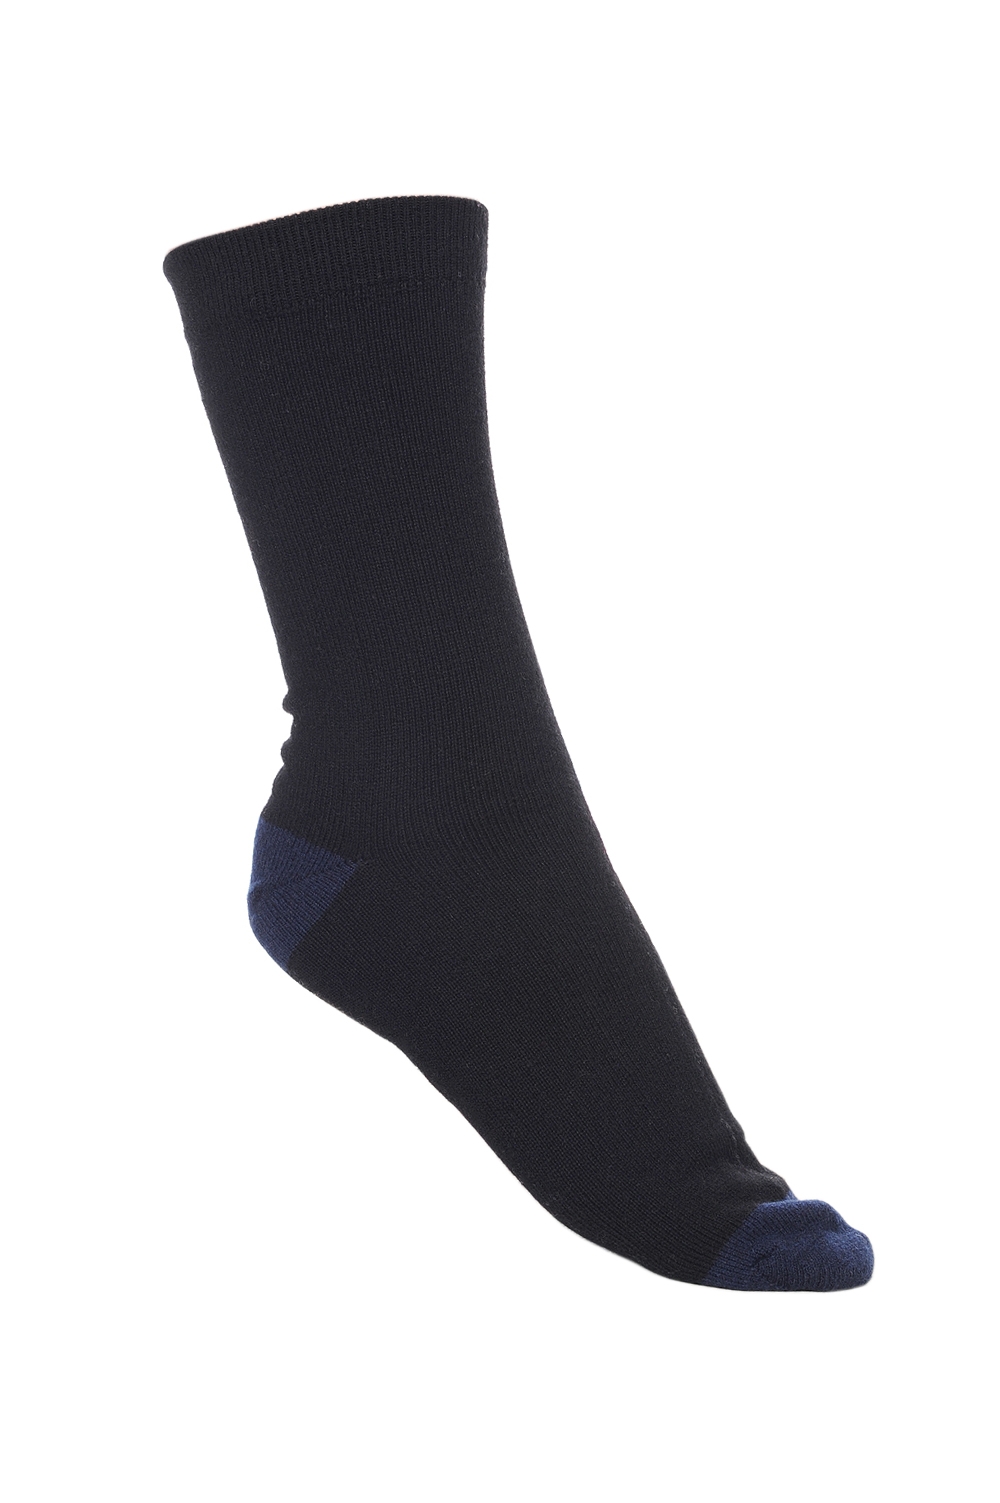 Cashmere & Elastane accessories socks frontibus black dress blue 5 5 8 39 42 